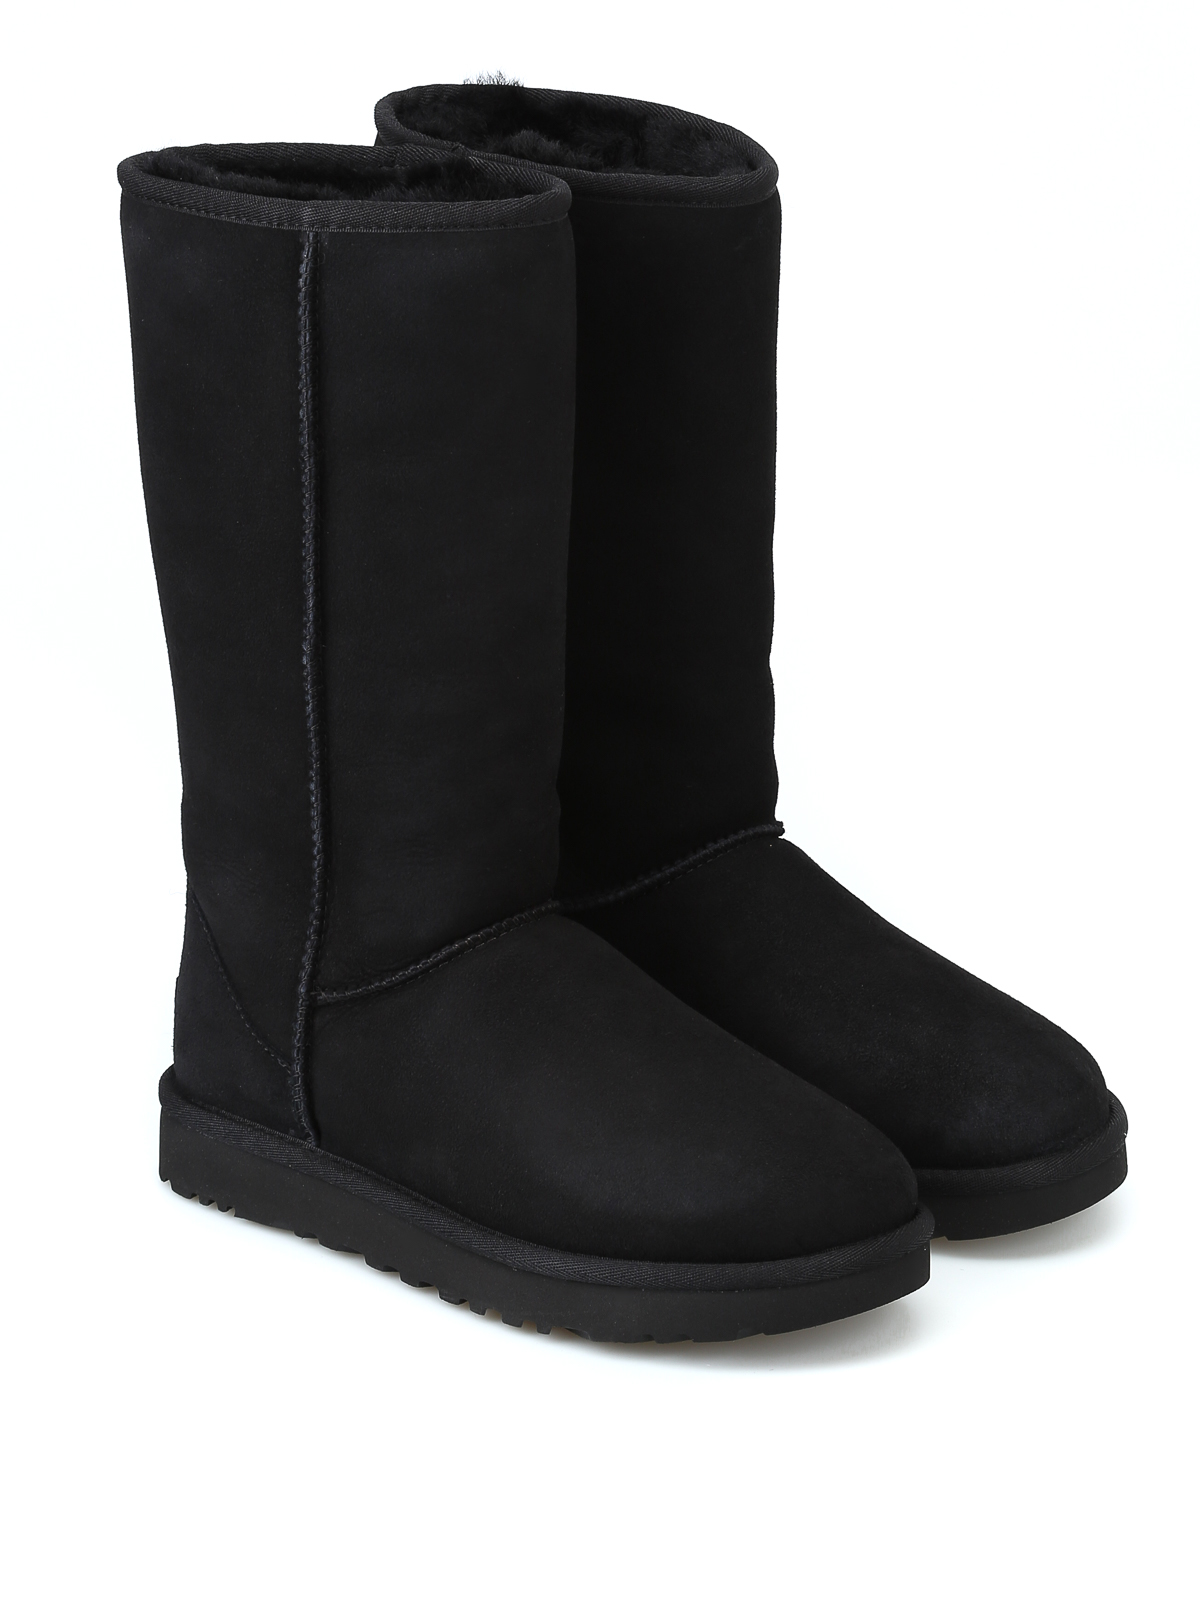 Ugg - Classic Tall II black boots 